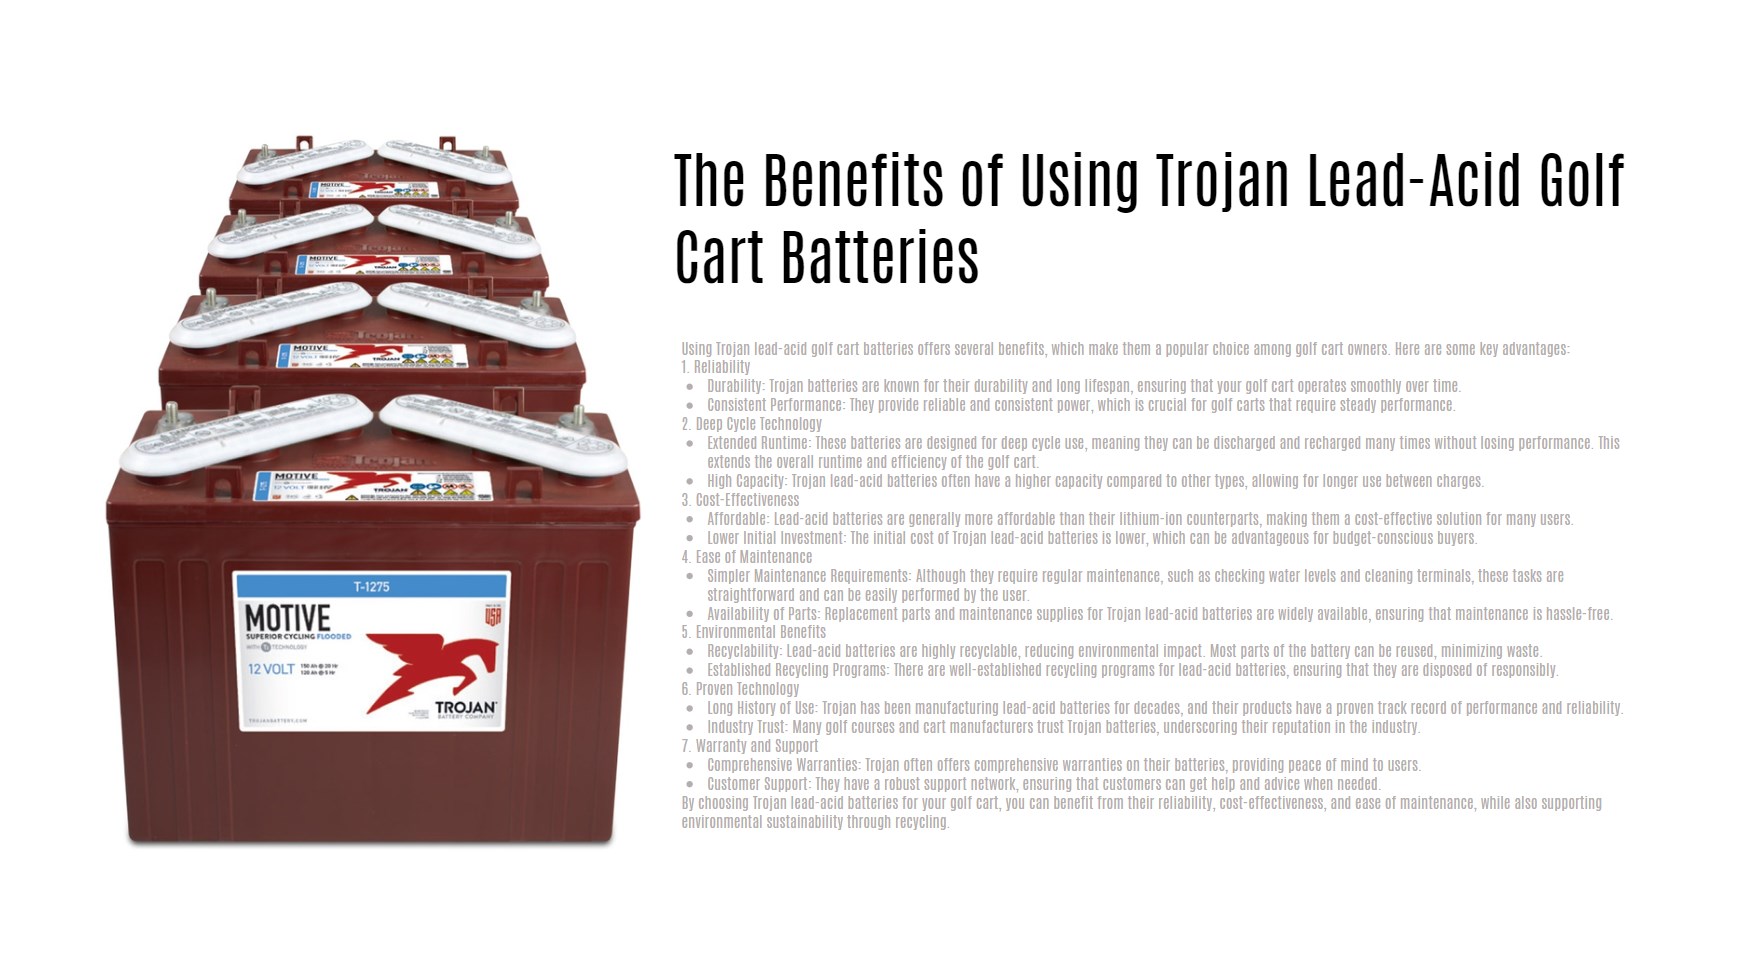 The Benefits of Using Trojan Lead-Acid Golf Cart Batteries
